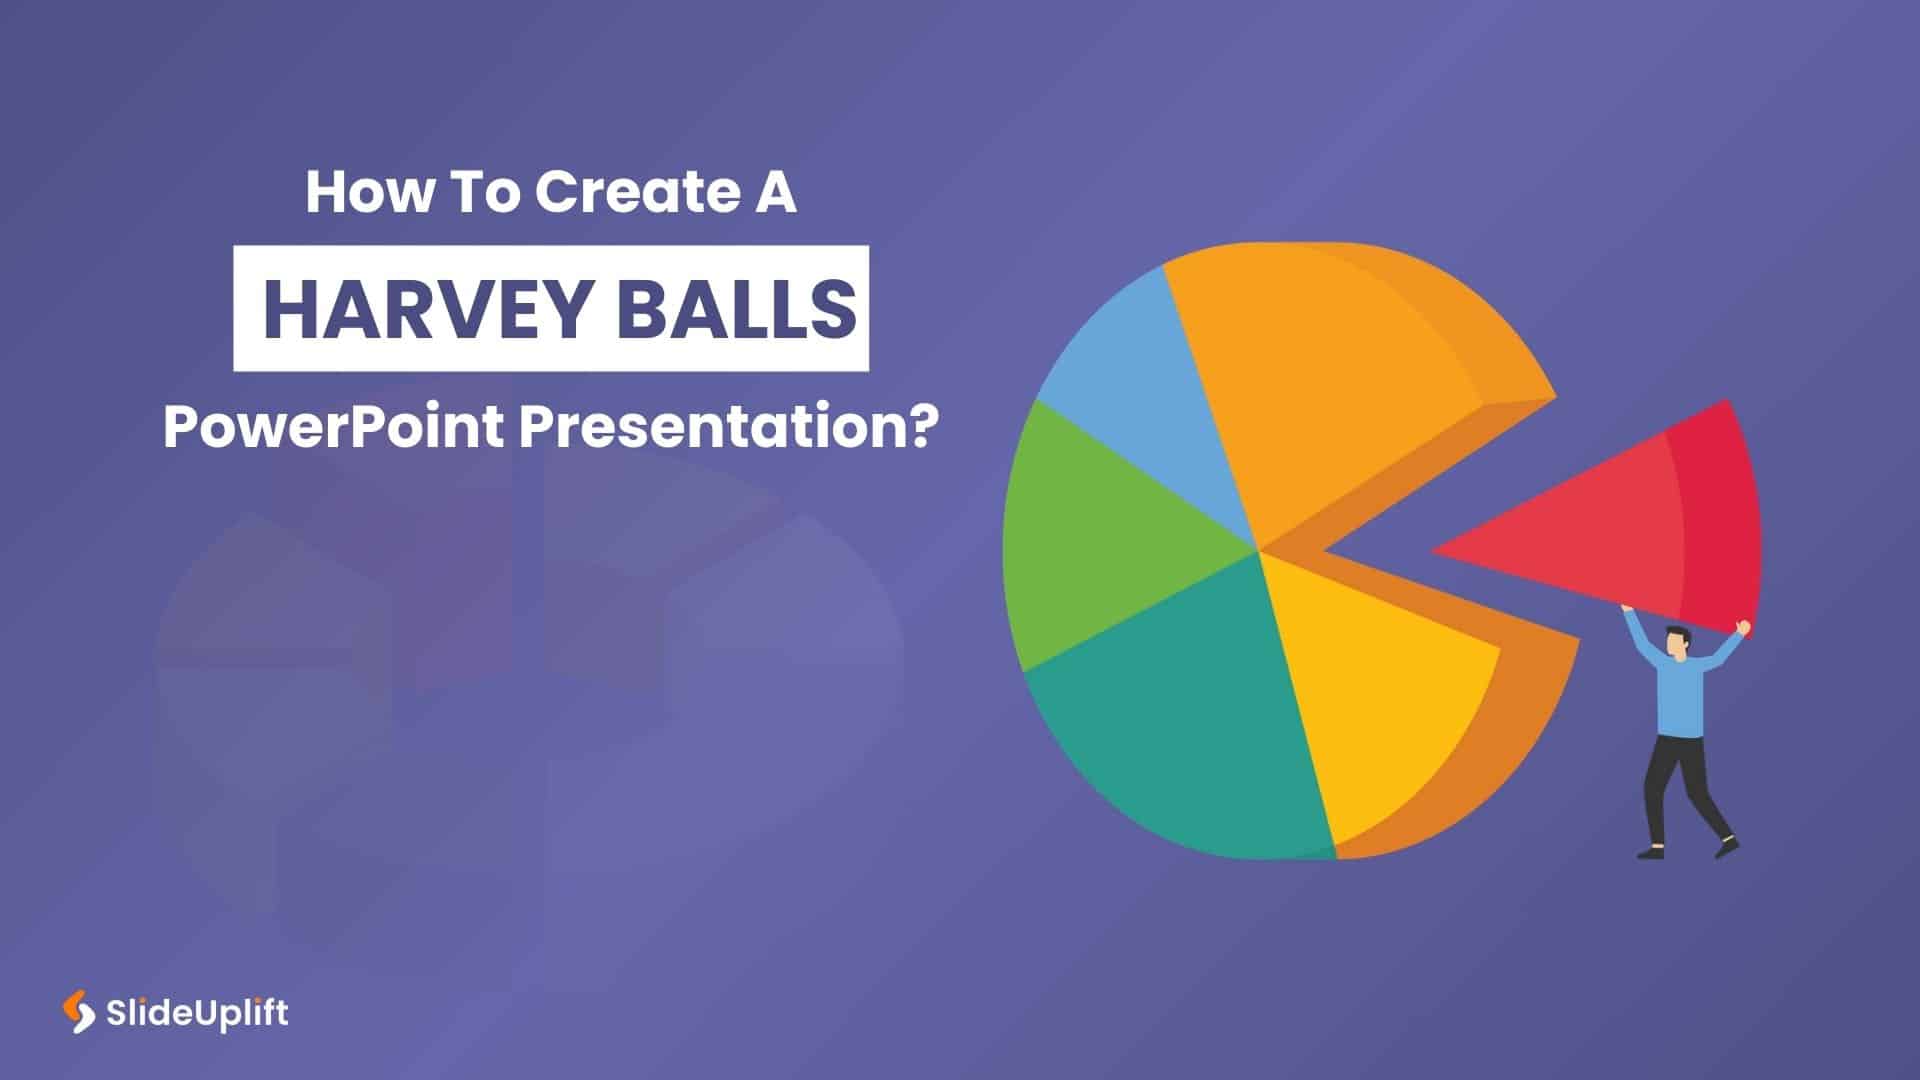 How To Create A Harvey Balls PowerPoint Presentation?